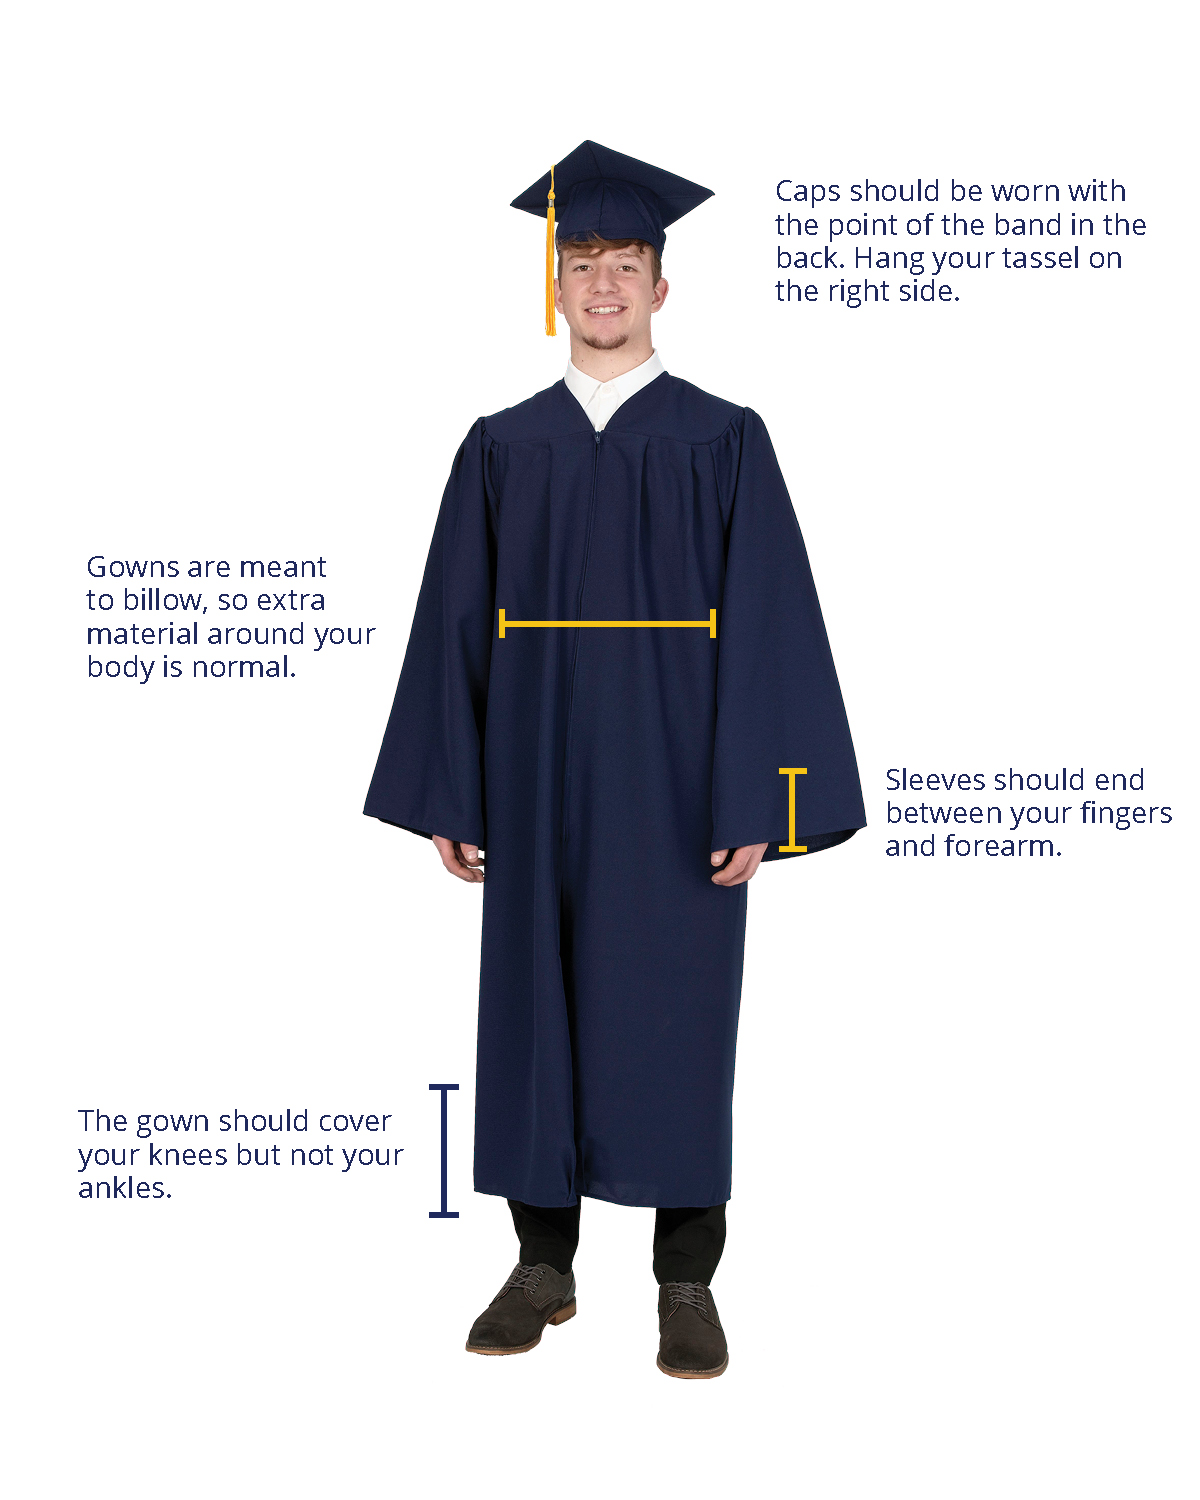 How a graduation gown should fit